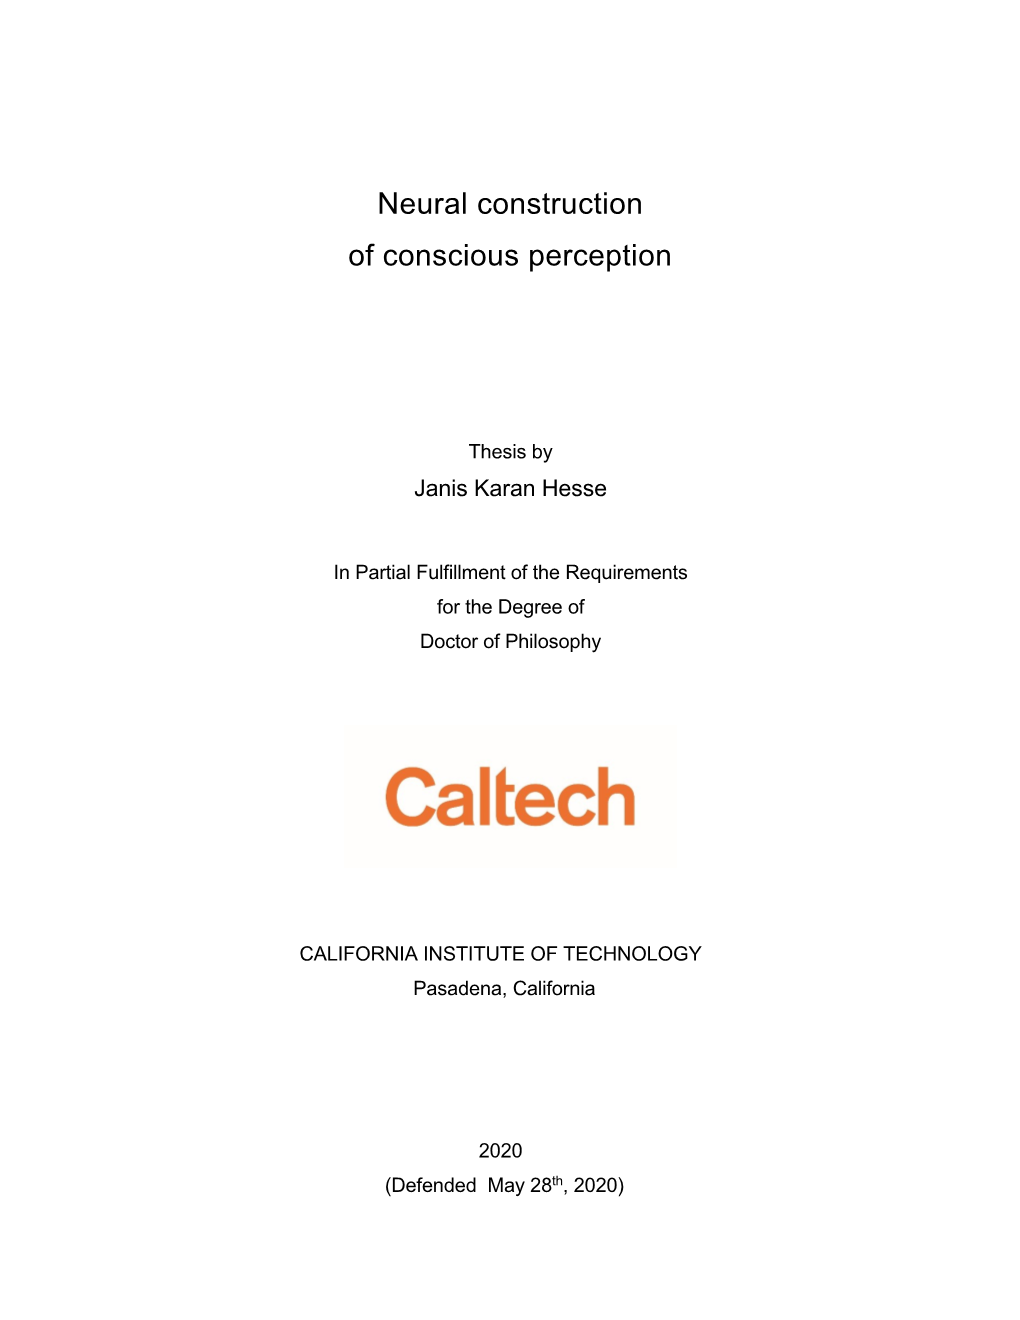 Neural Construction of Conscious Perception